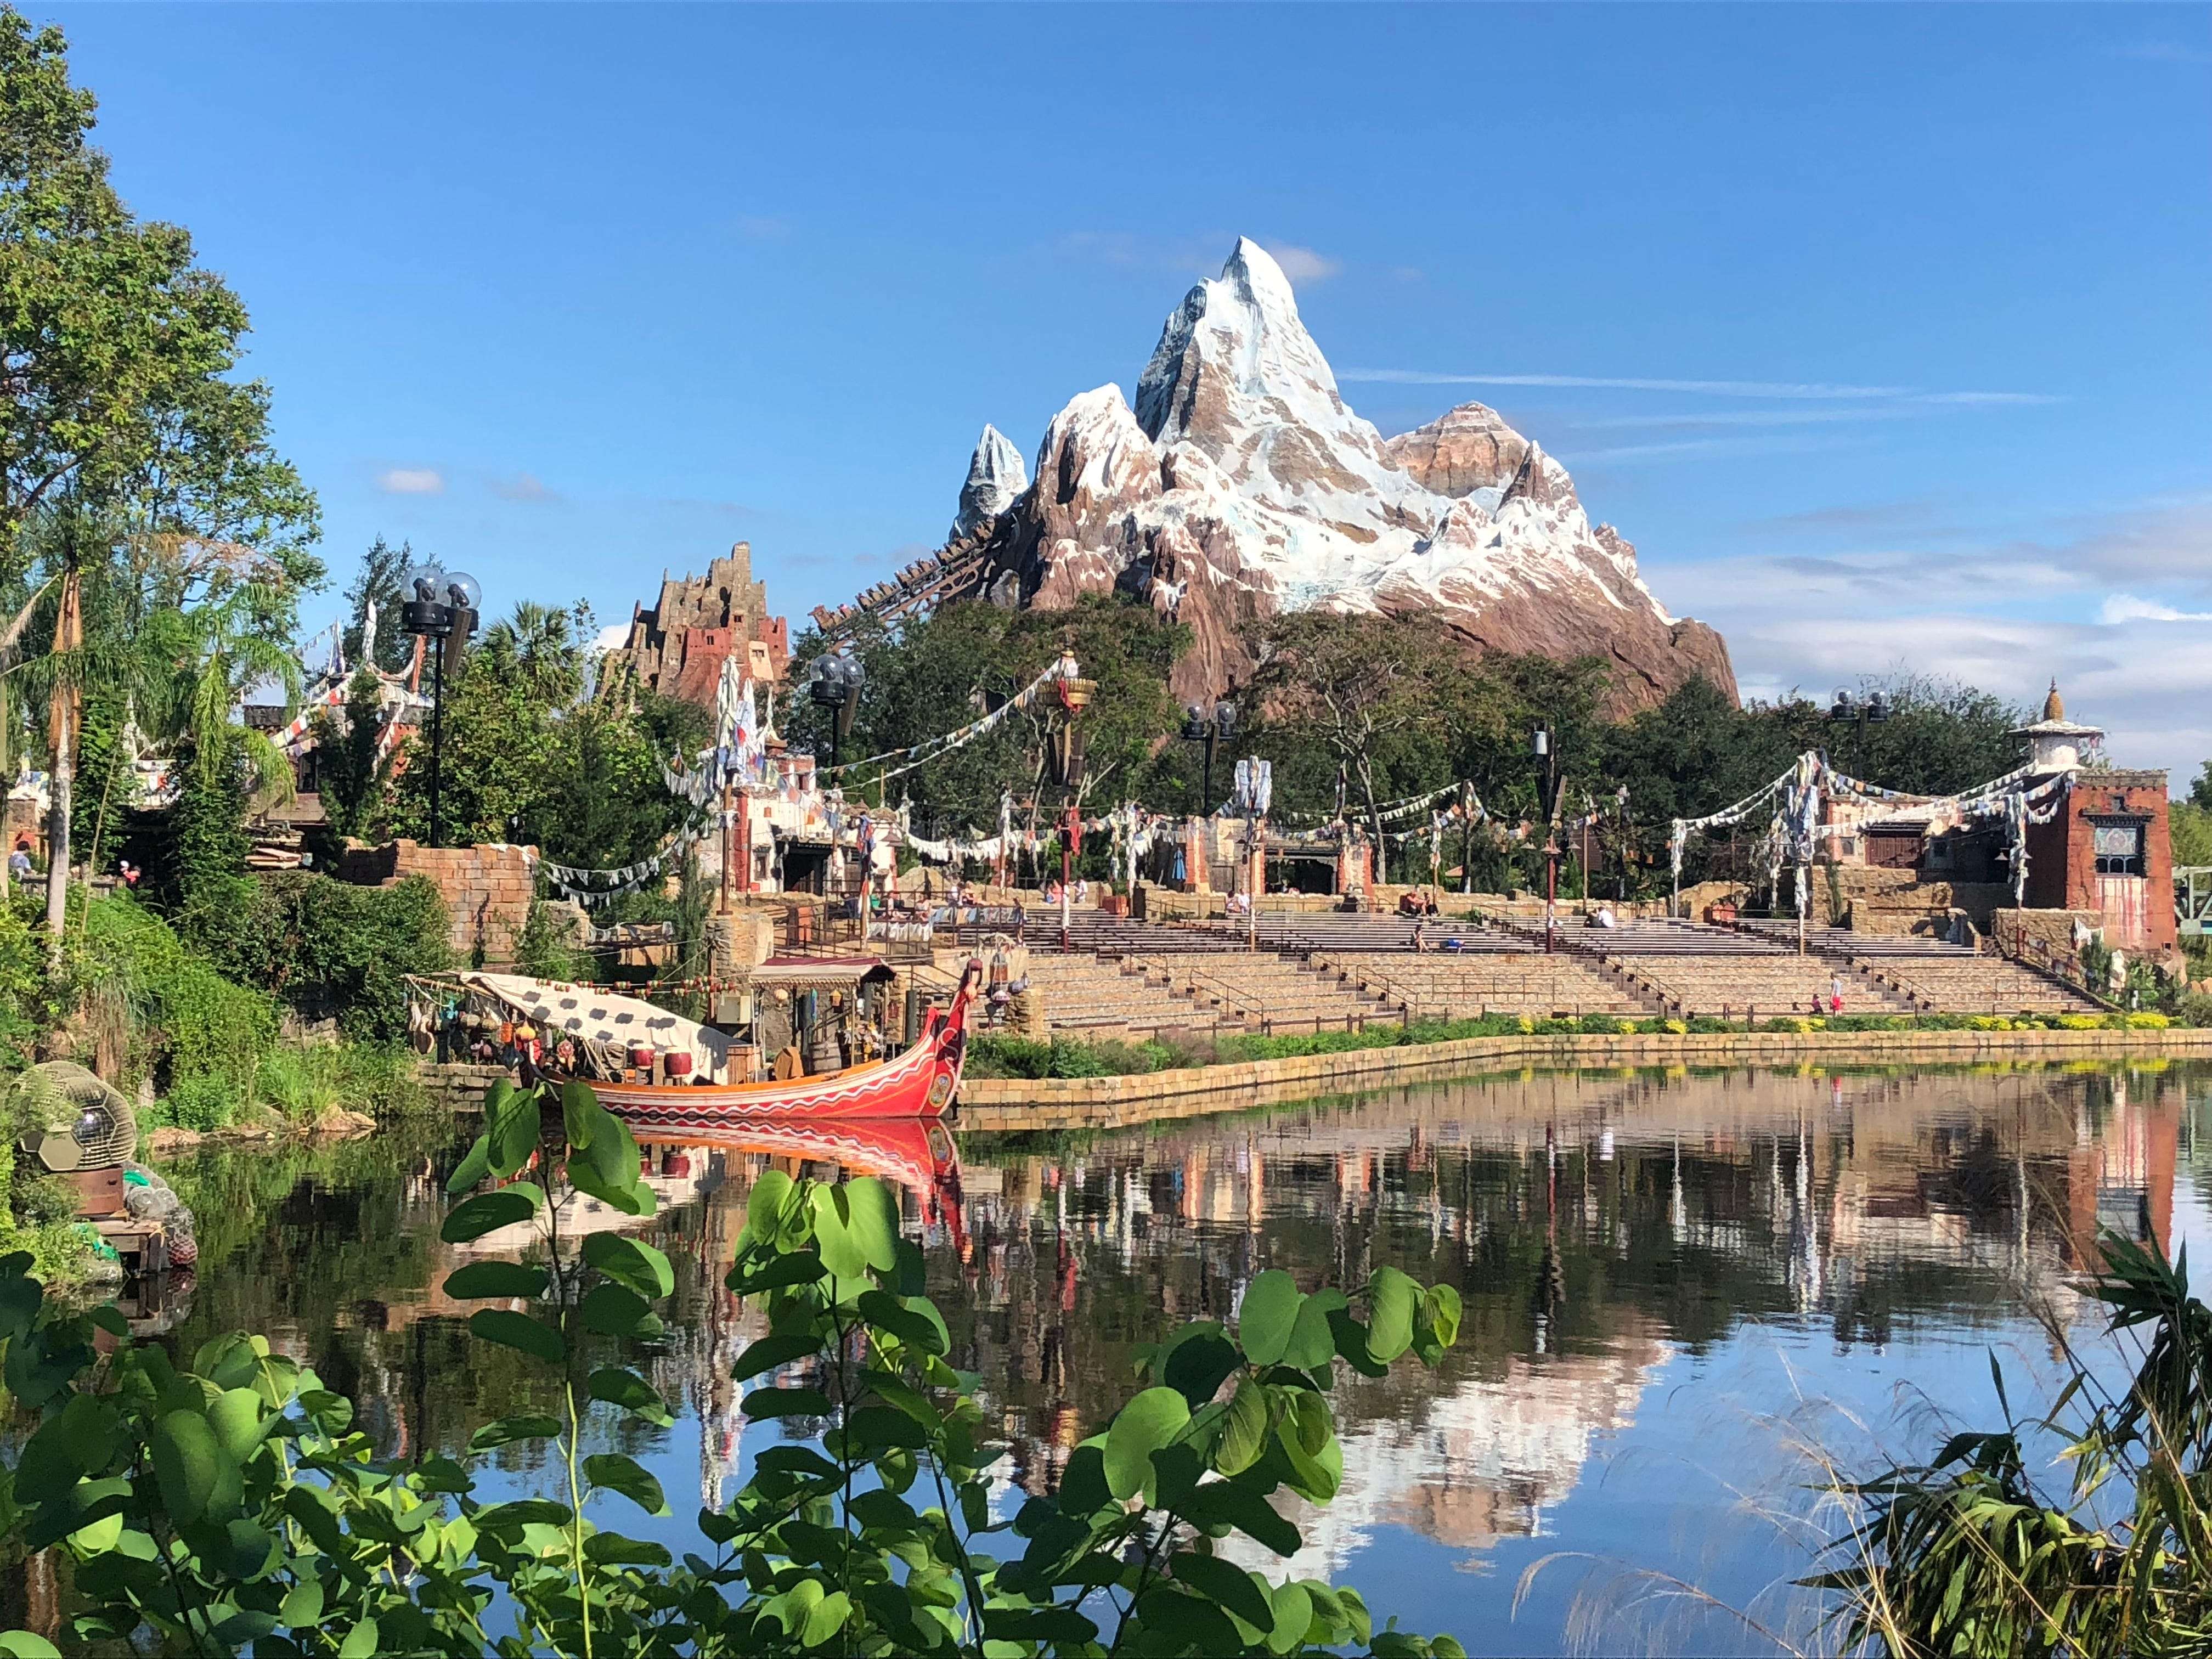 Disney Working on Yeti Problem at Animal Kingdom, Unexpectedly Updates Ride  - Inside the Magic